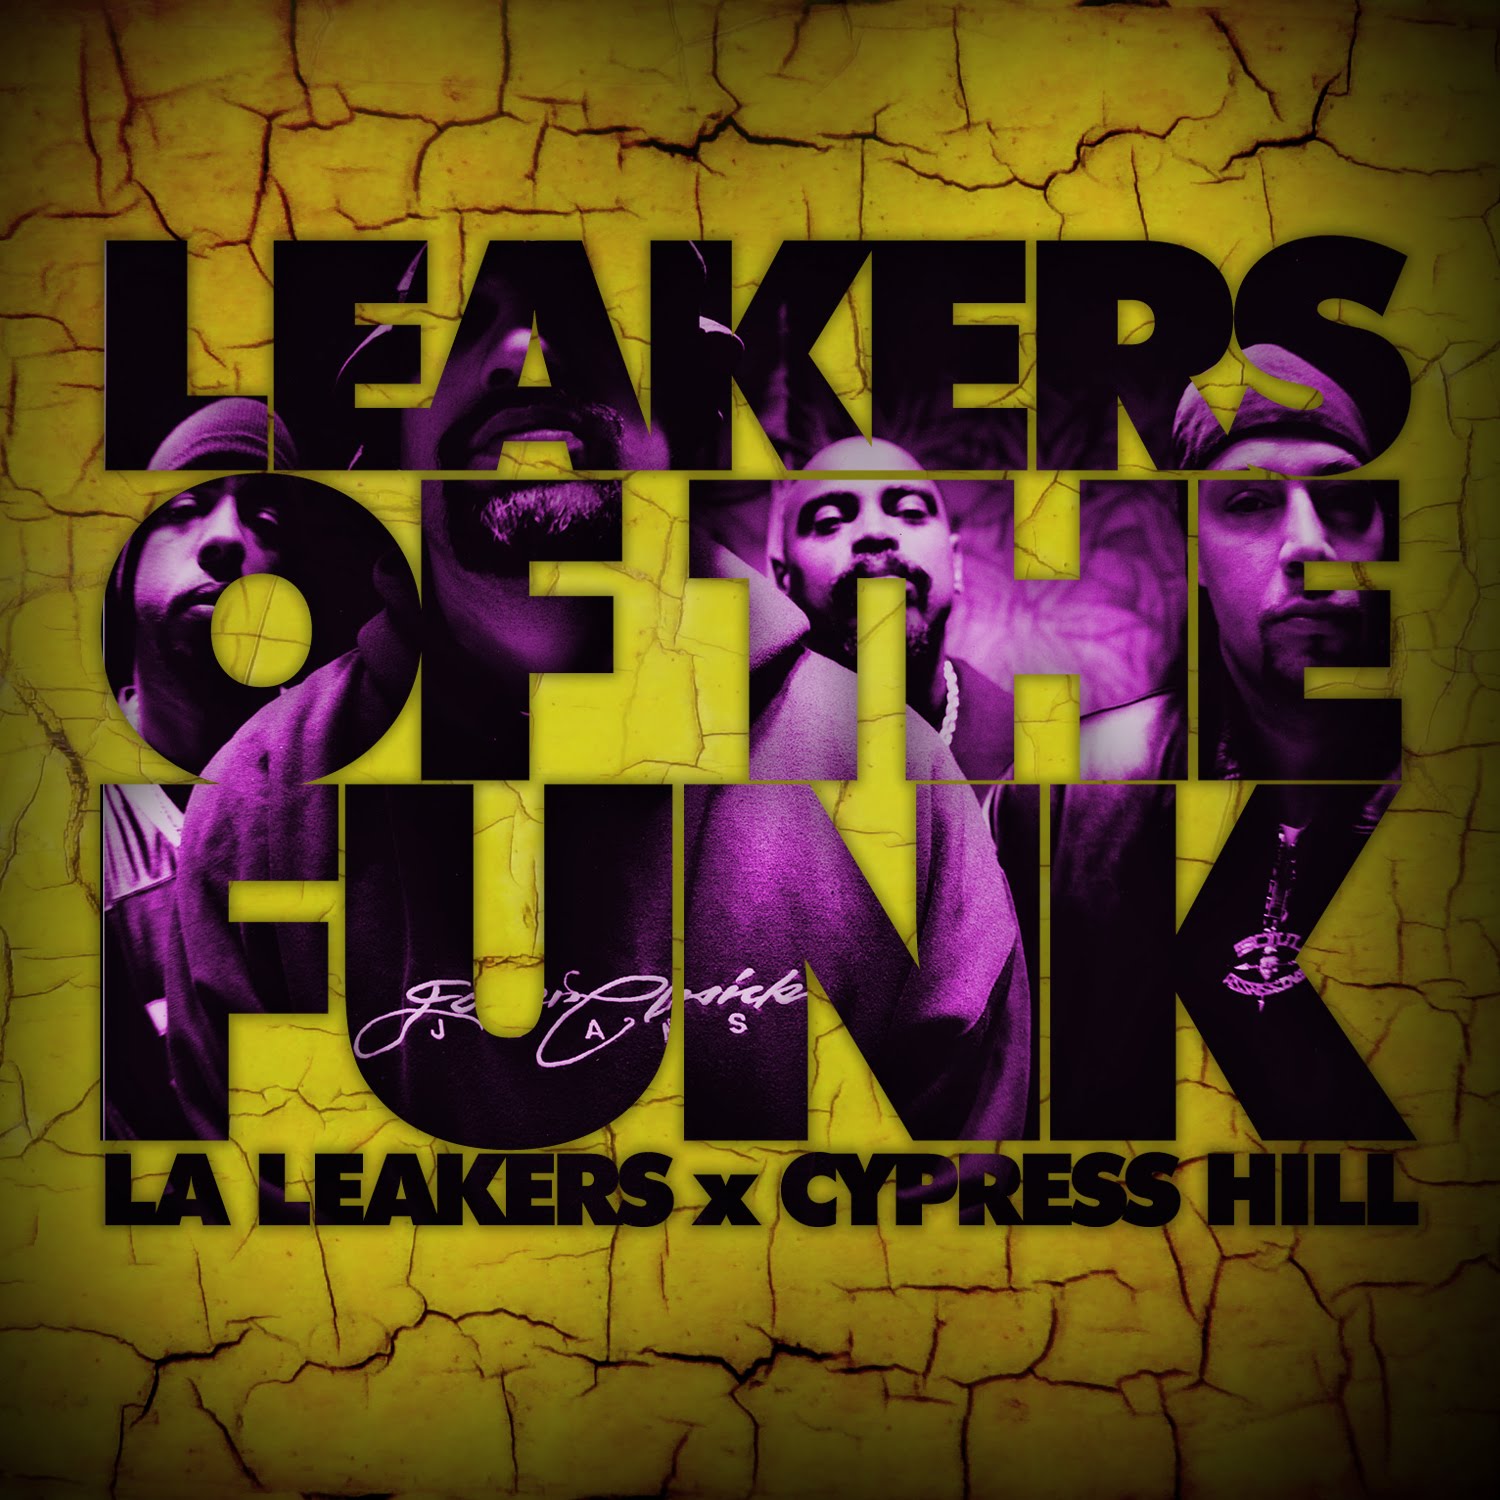 Skrewed Up Meskinz: LA Leakers x Cypress Hill - Leakers of The Funk [2010]